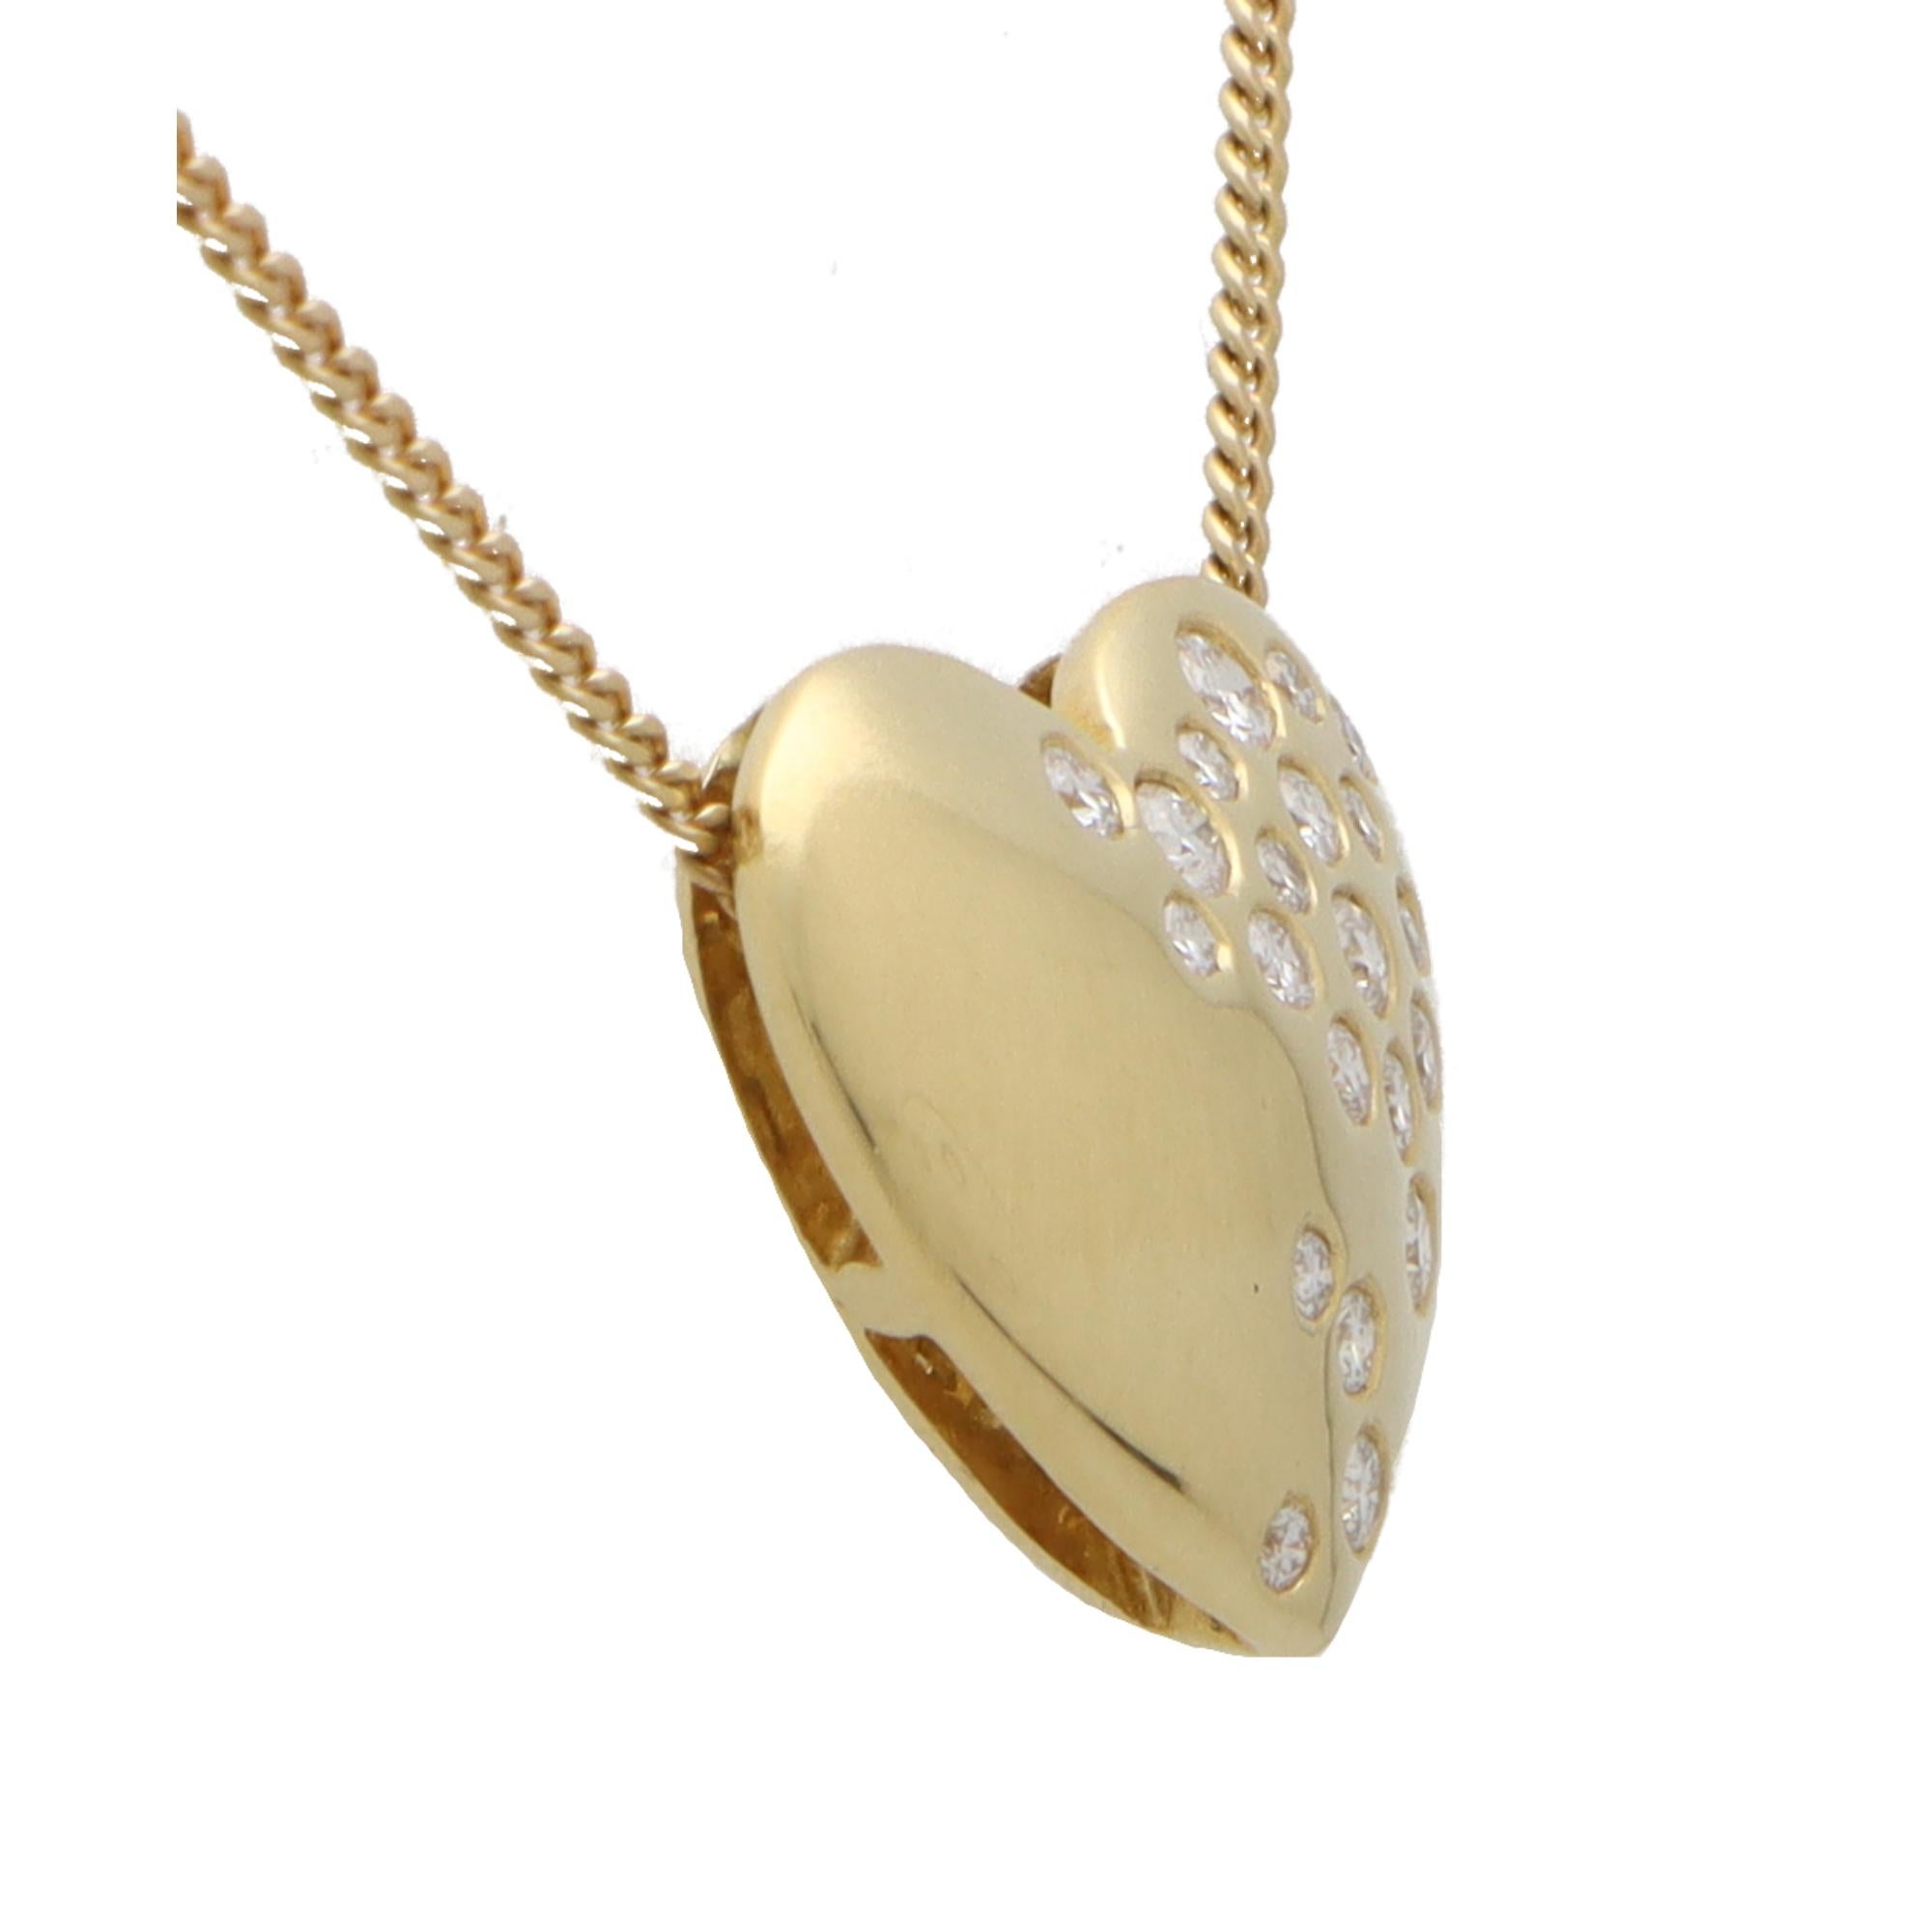 Modern Contemporary Diamond Heart Pendant Necklace Set in 18k Yellow Gold